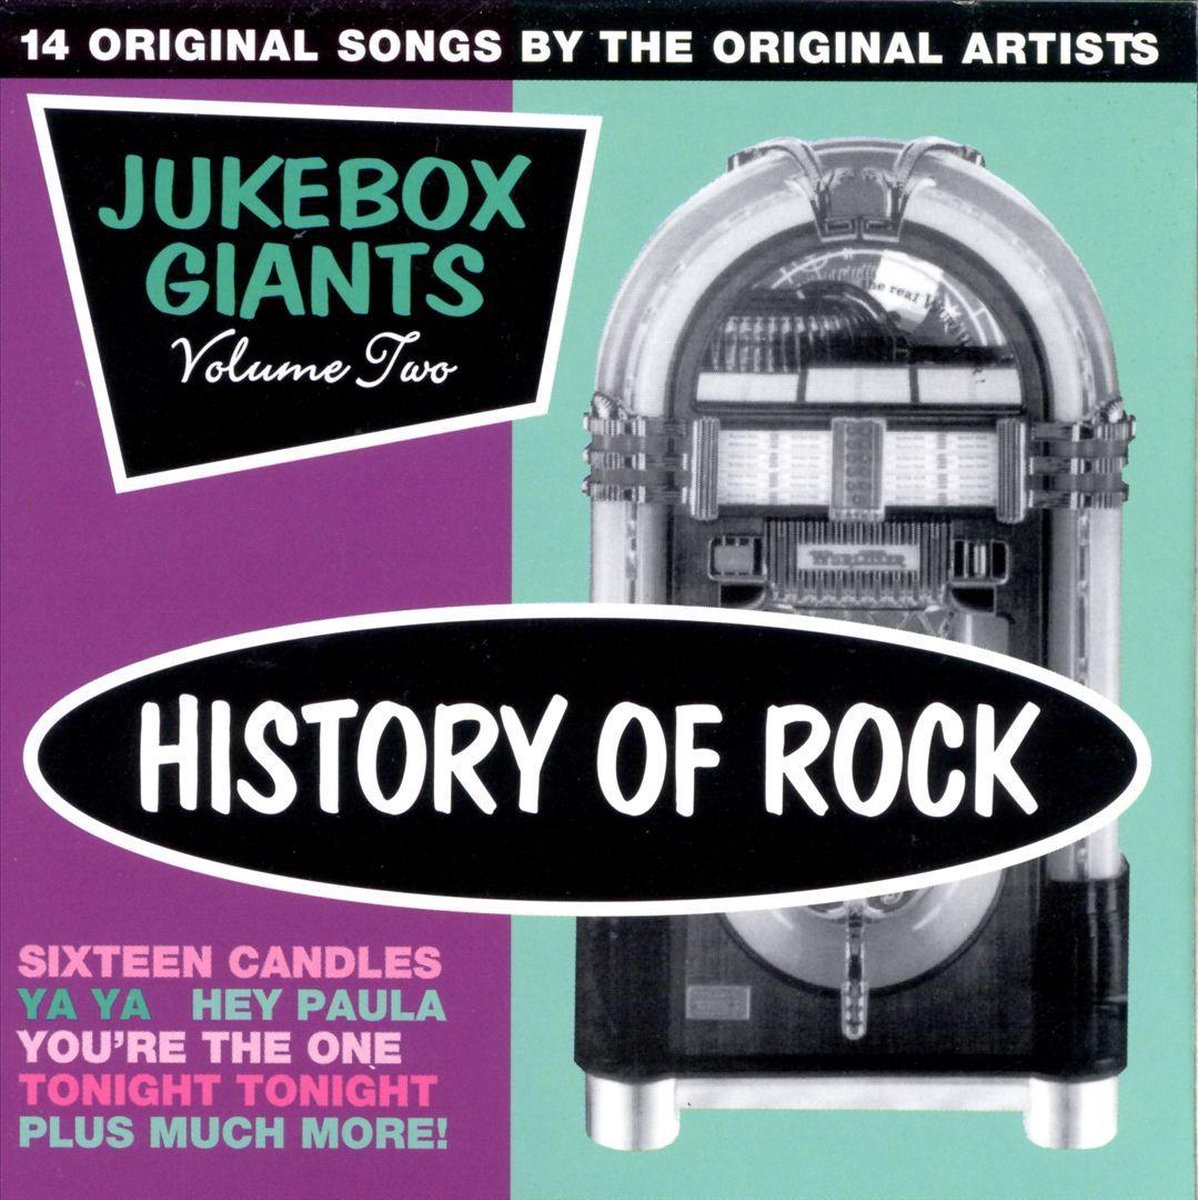 History Of Rock: Jukebox Giants Vol. 2 - various artists